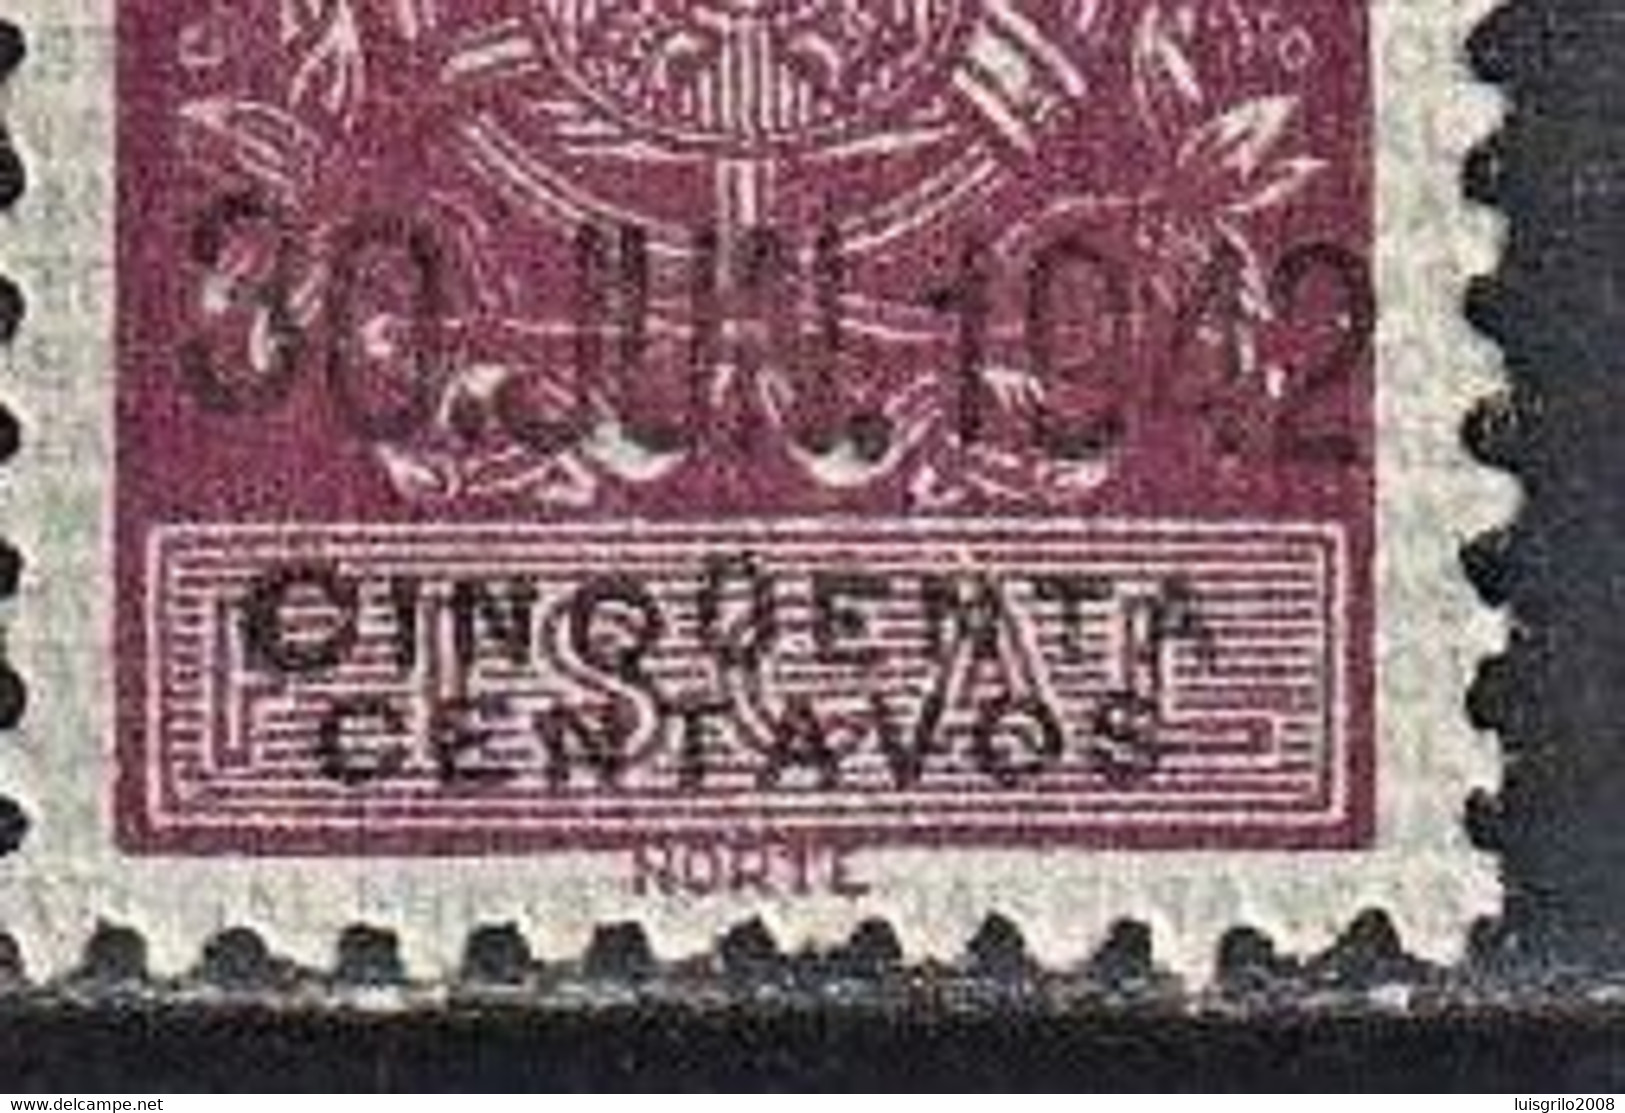 Fiscal/ Revenue, Portugal 1940 - Estampilha Fiscal -|- RARE STAMP - 0$50 Cinqüenta (Accents On The Letter U) - Gebraucht